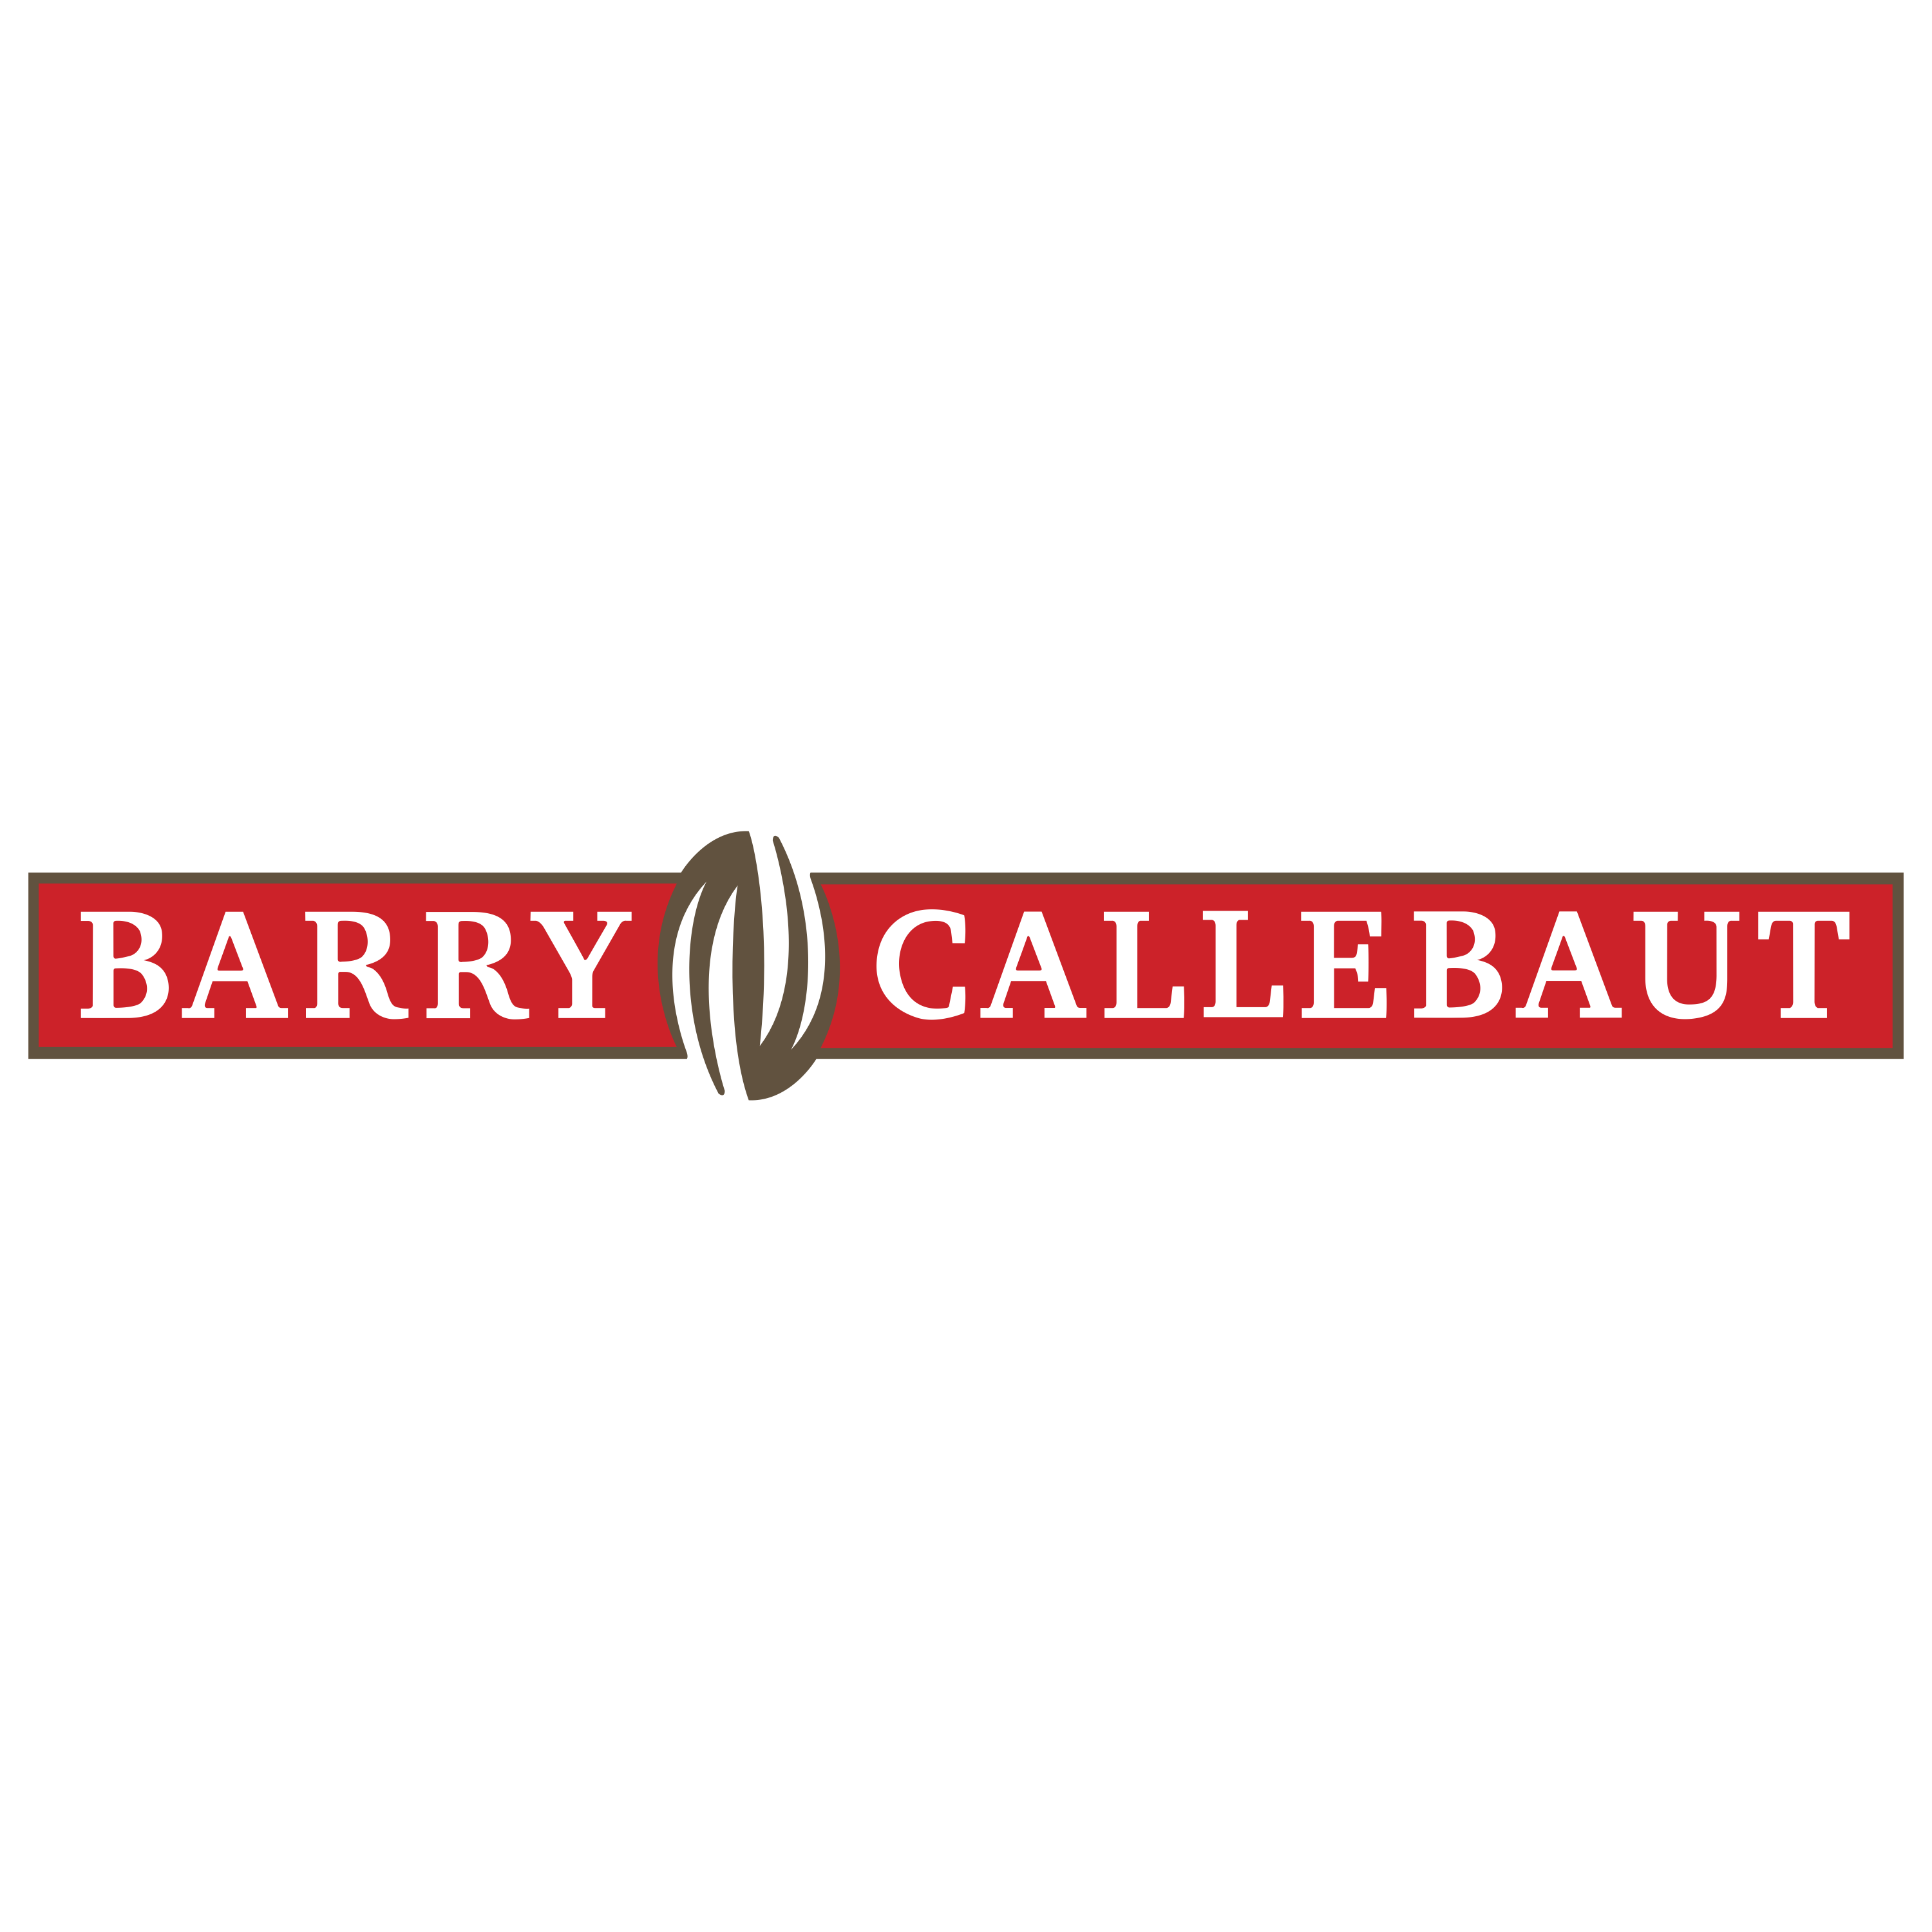 Image of Barry Callebaut logo